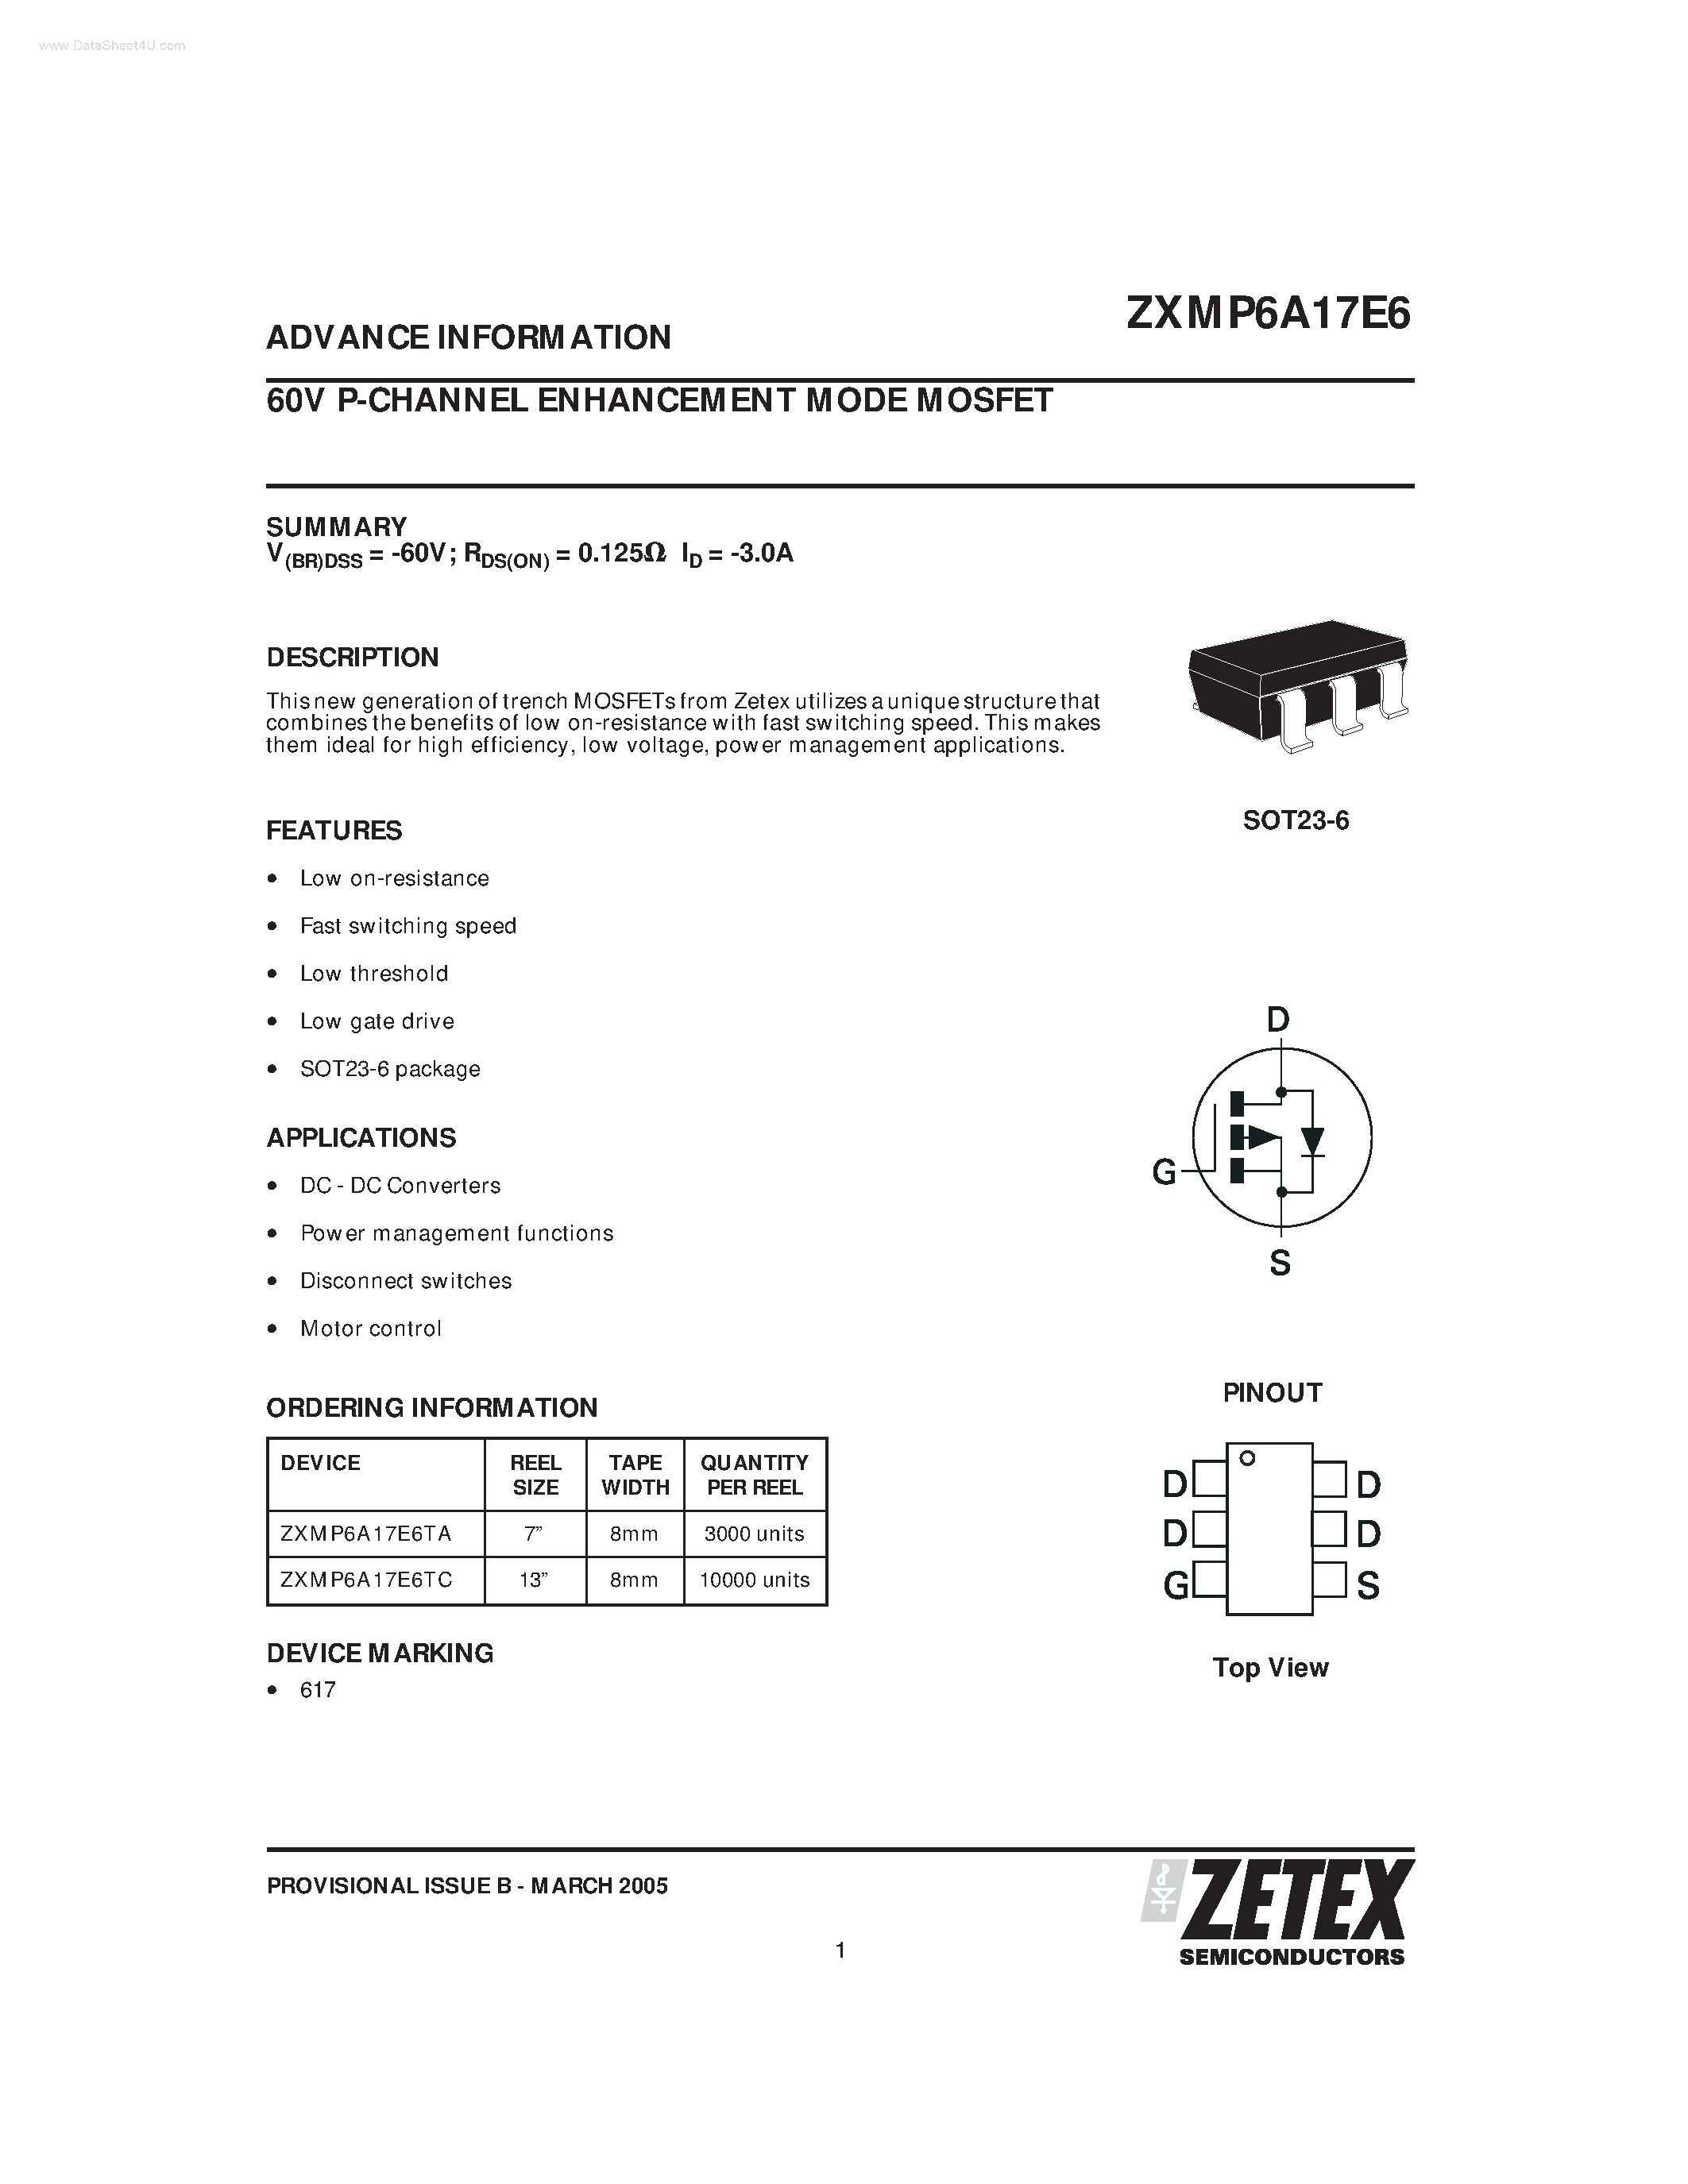 Datasheet ZXMP6A17E6 - P-CHANNEL ENHANCEMENT MODE MOSFET page 1